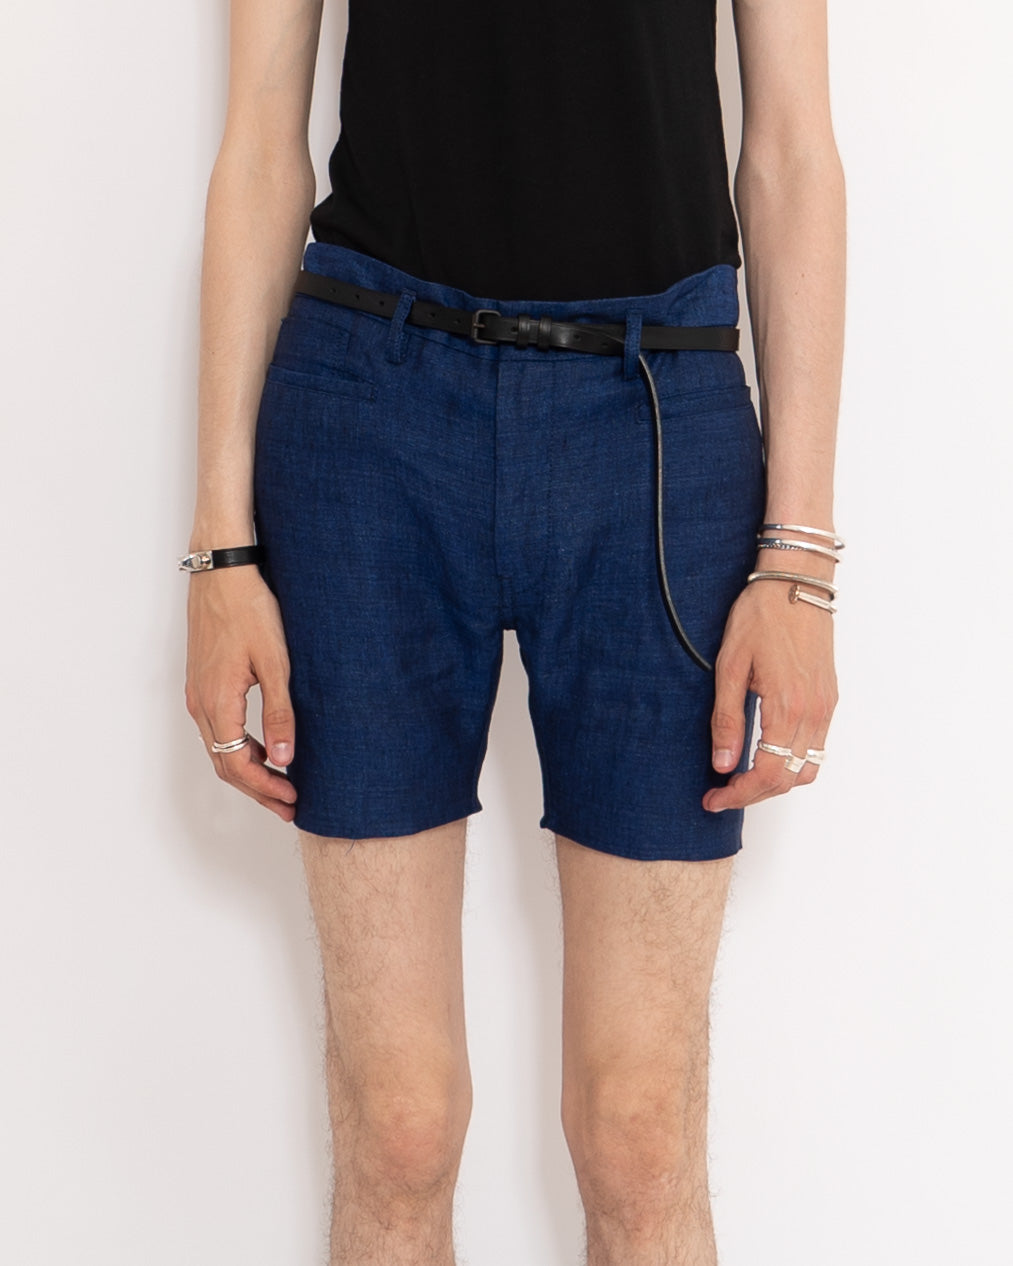 SS16 Blue Cotton Shorts Sample